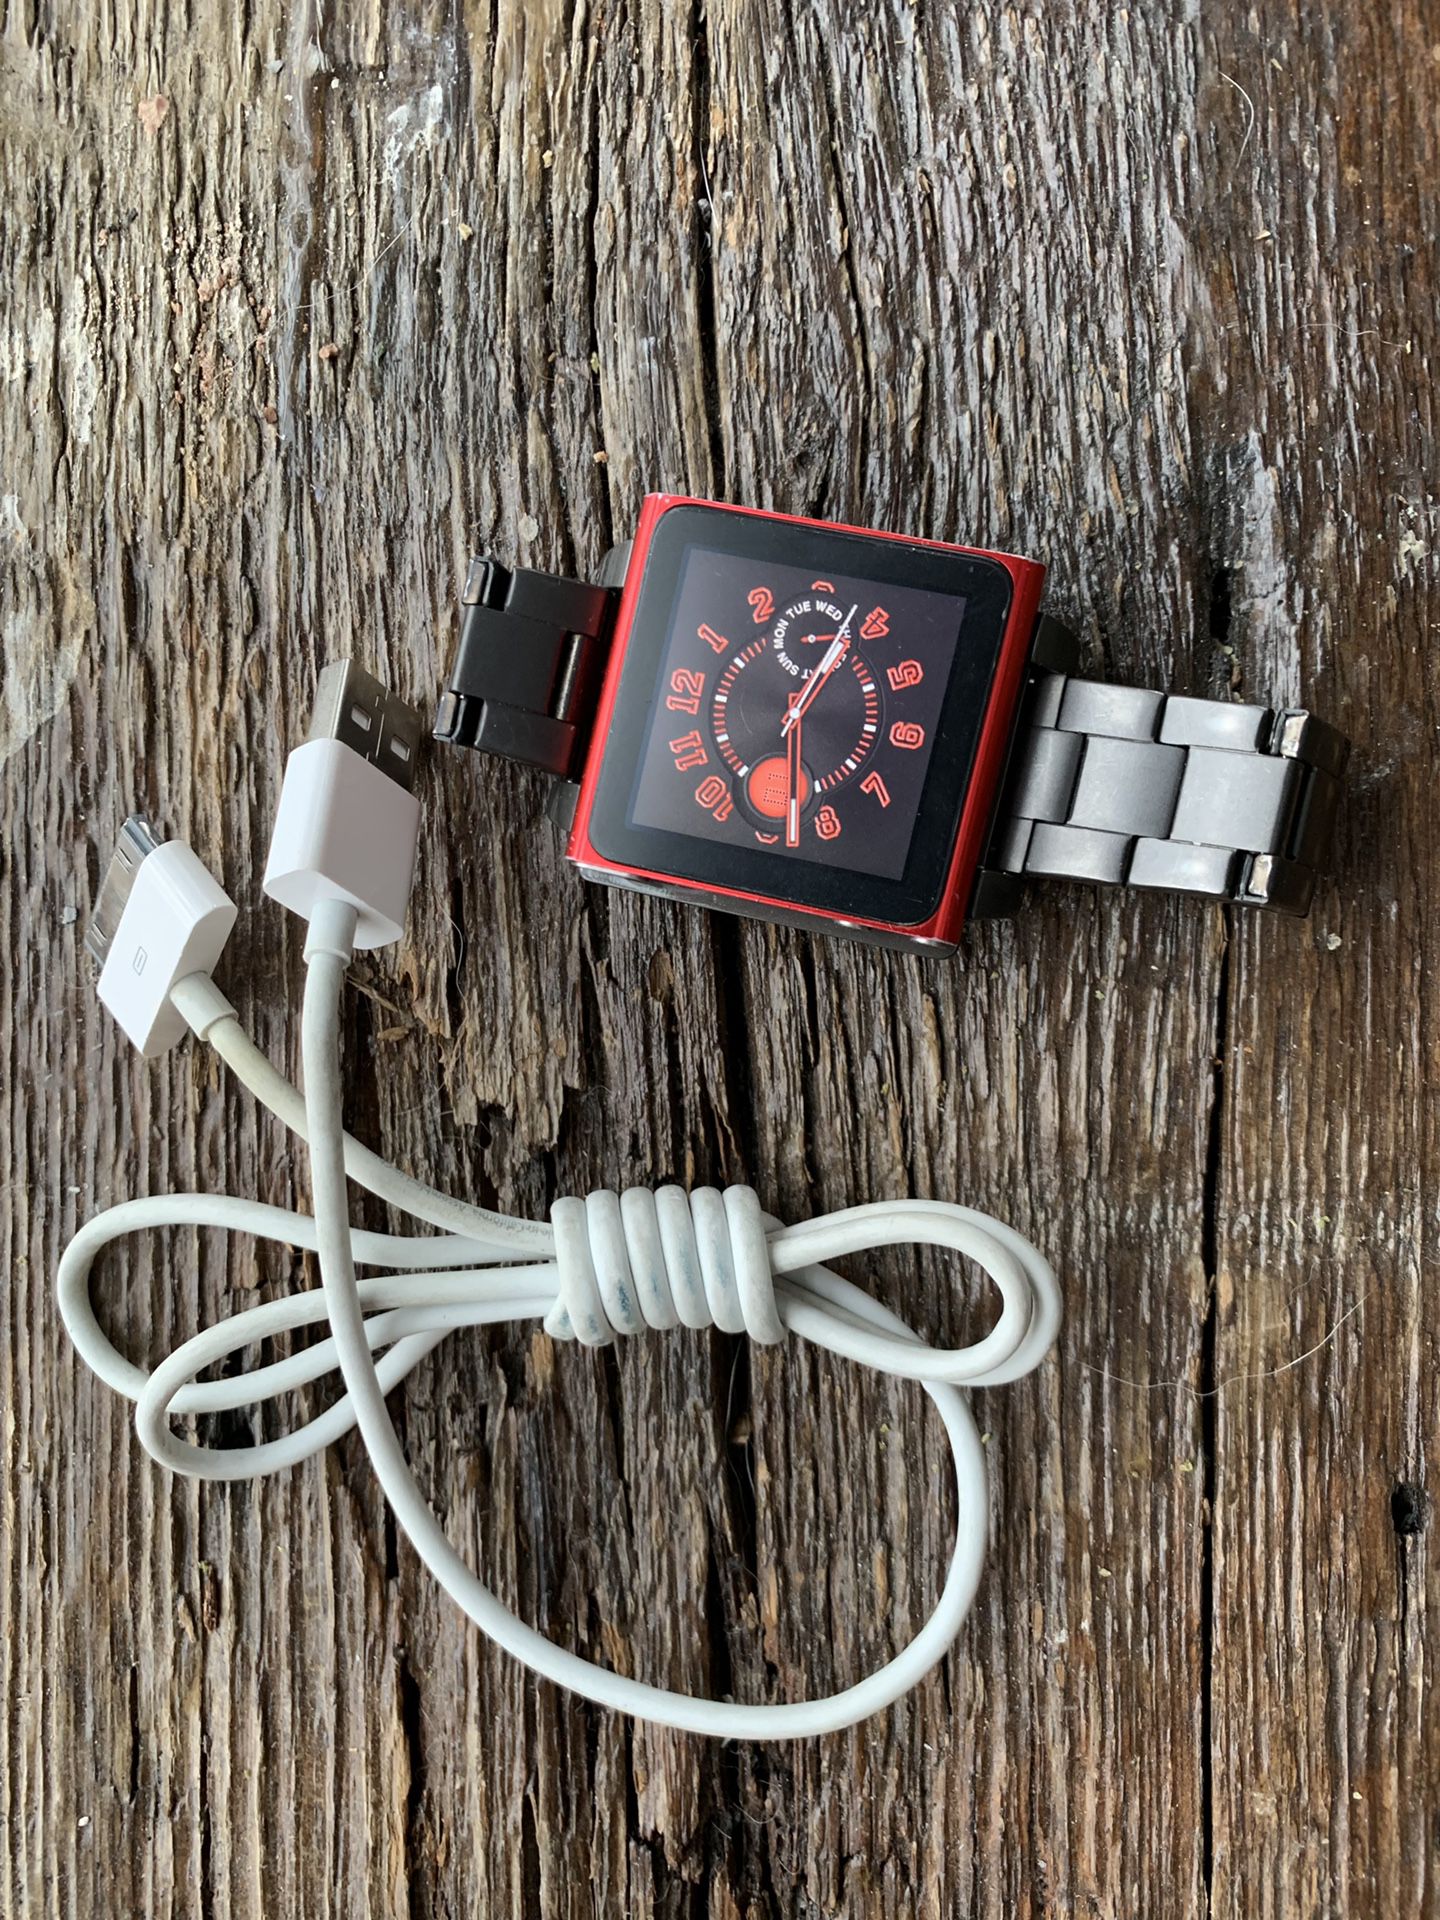 OG Apple iPod Nano watch